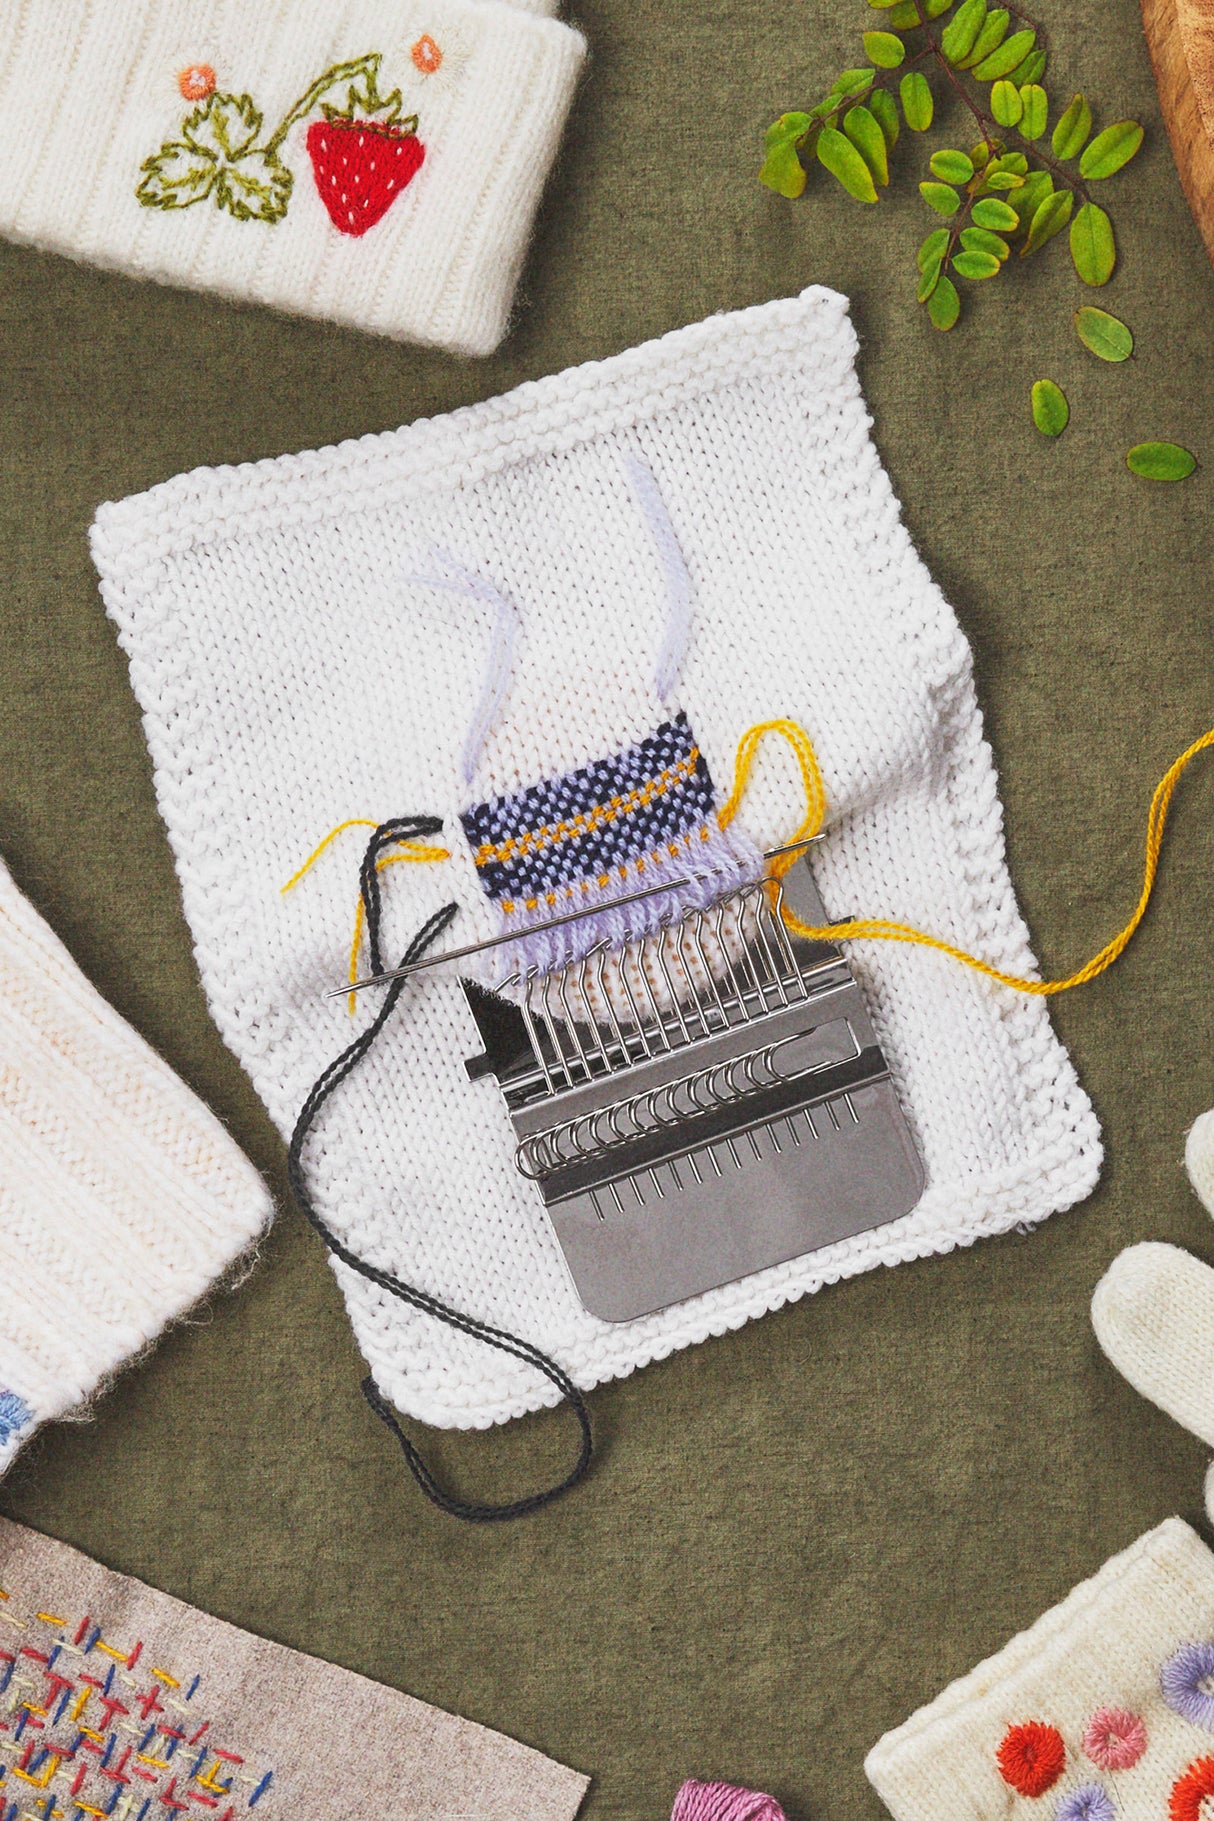 DMC Weaving Kit: 14 Hook Mini Loom for Creativity and Sustainable Repairs